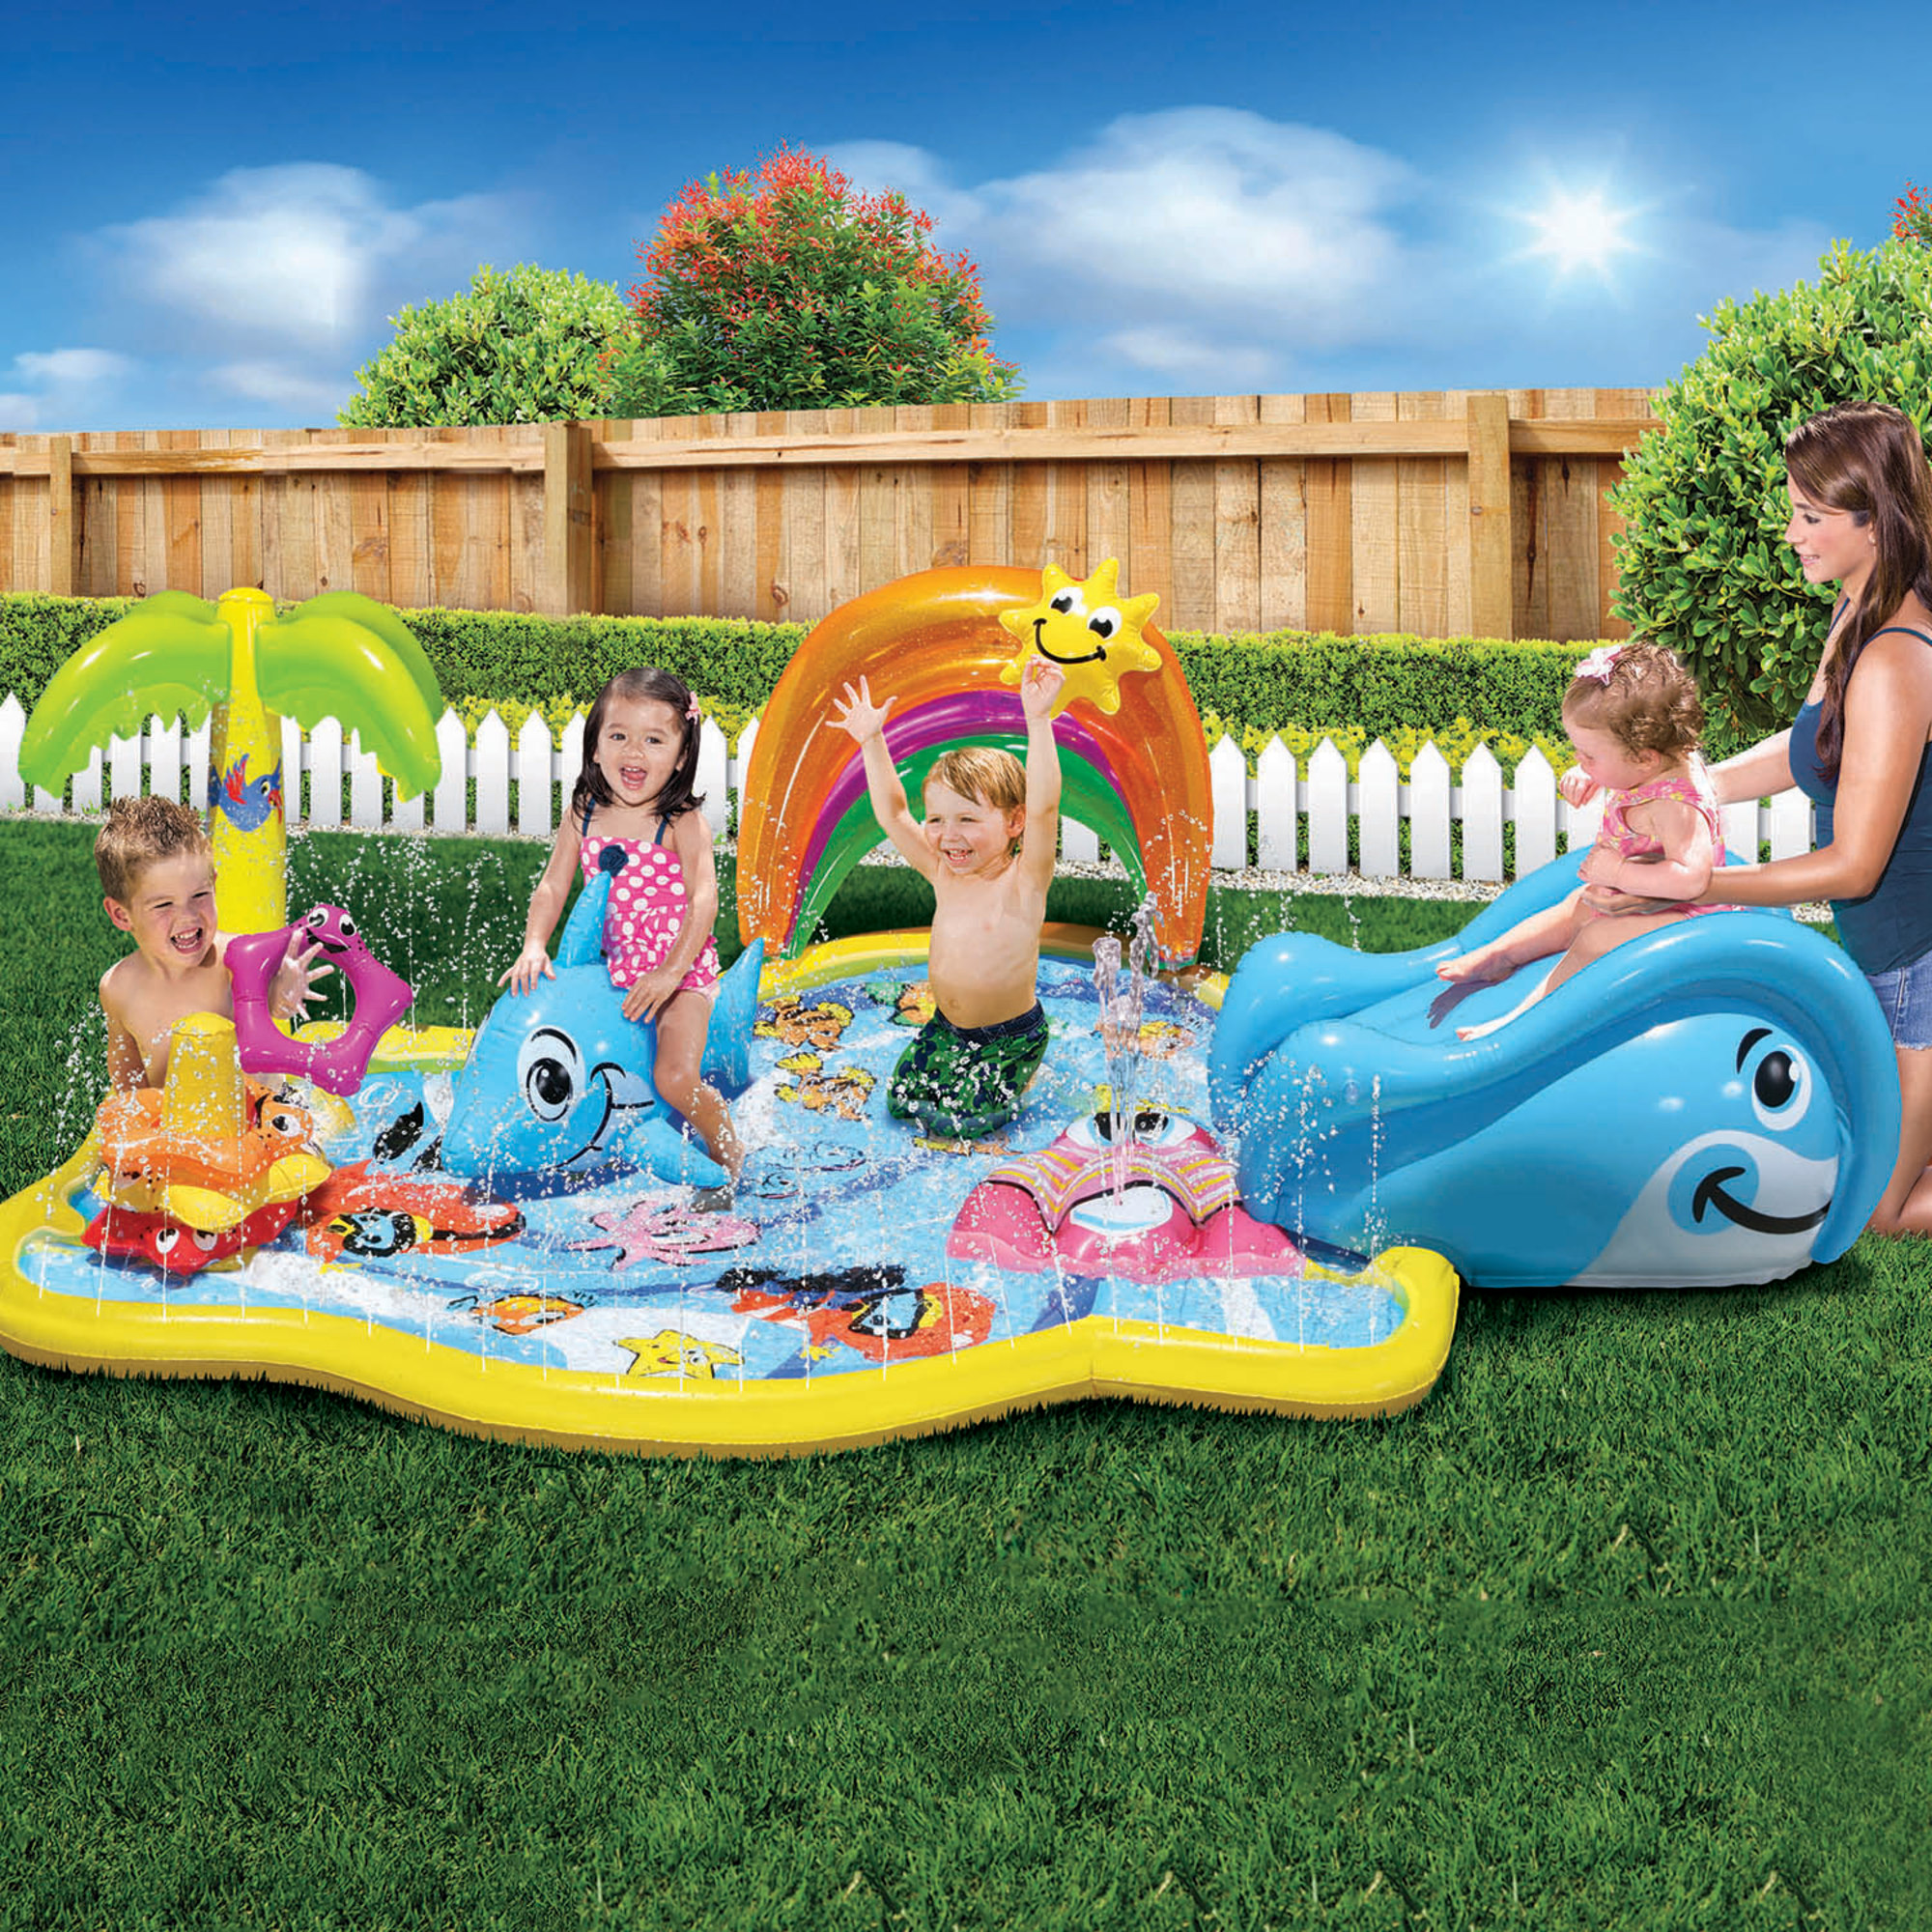 Banzai Splish Splash Water Park JR, Length: 90 in, Width: 52 in, Height: 24 in, Junior Inflatable Outdoor Backyard Water Splash Toy - image 2 of 5